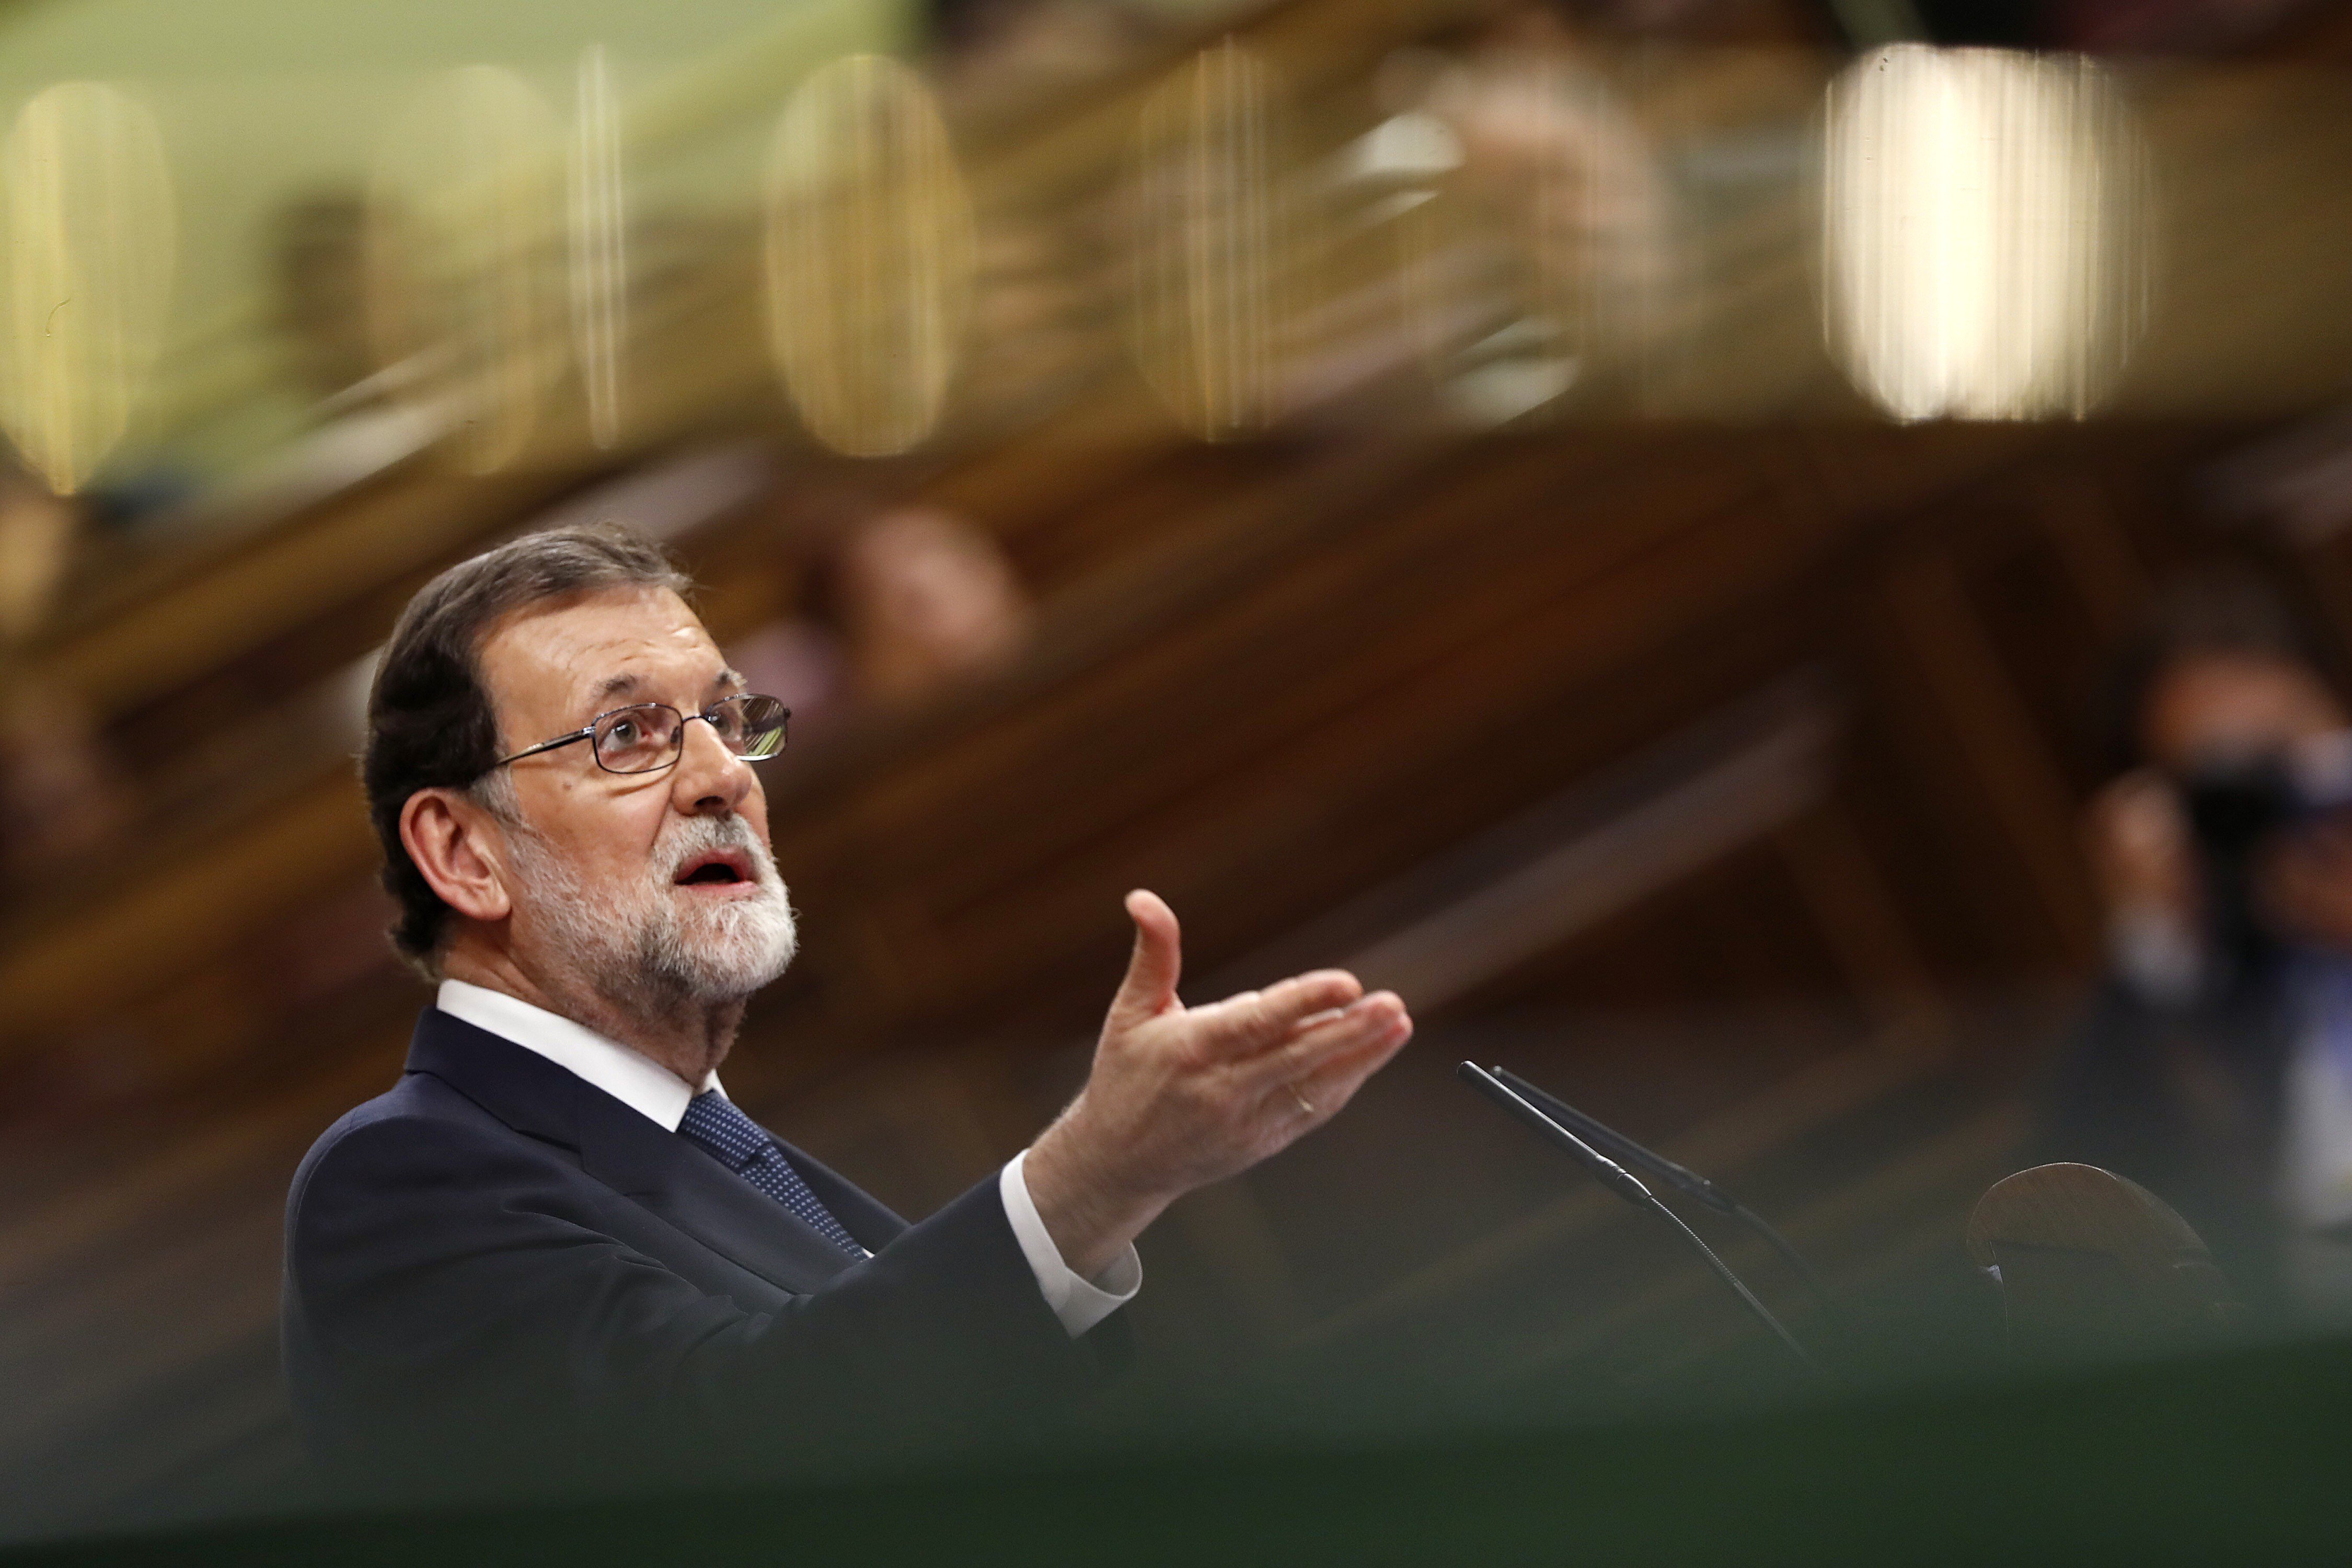 Rajoy tries to blame Puigdemont if article 155 is enacted